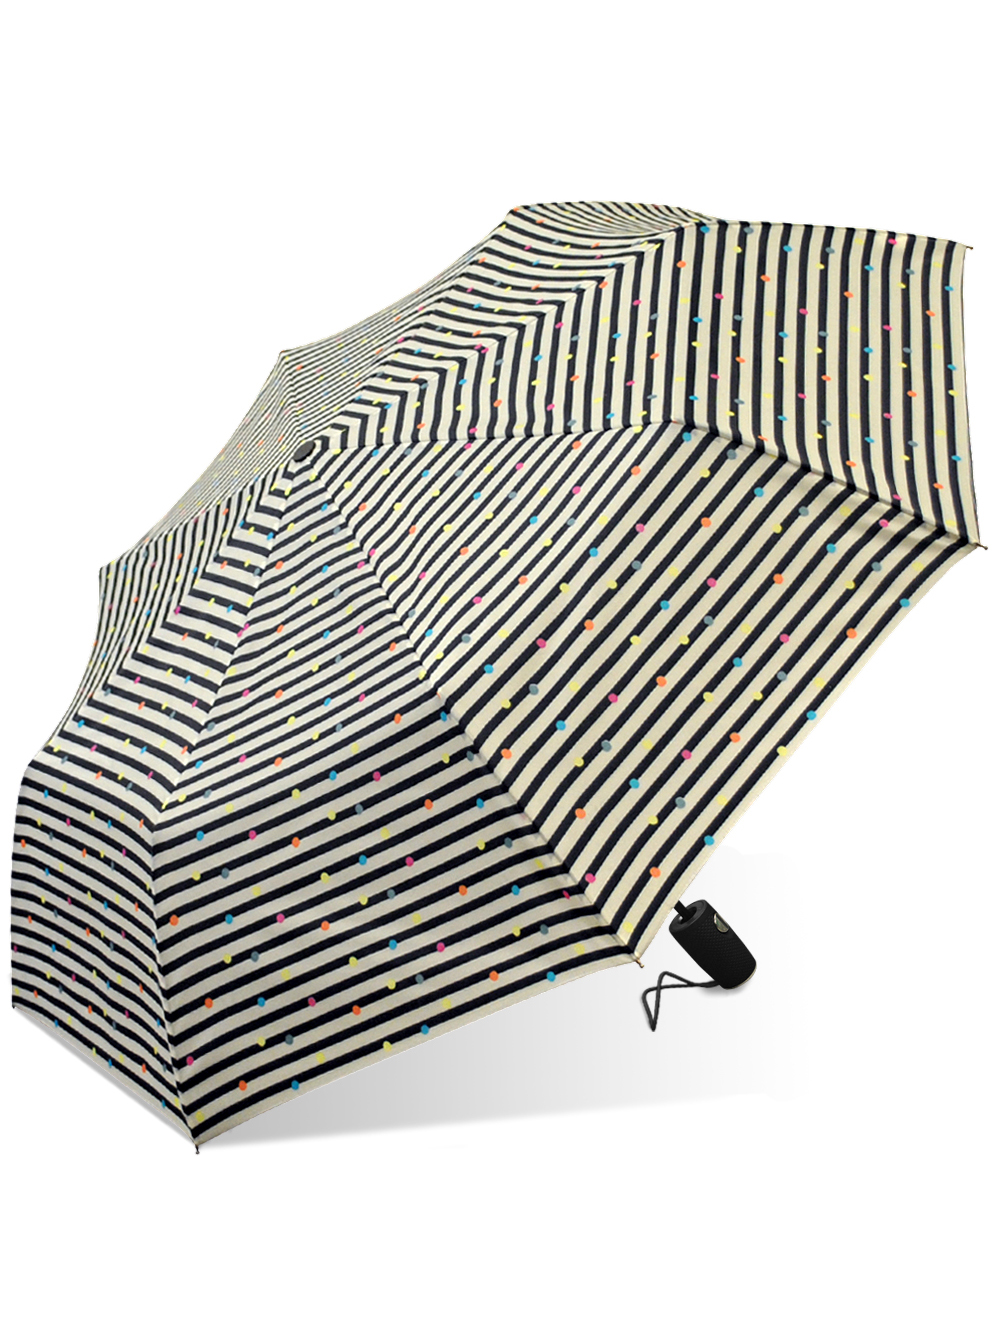 Weather Station Automatic Super Mini Rain Umbrella Stripes - image 1 of 5